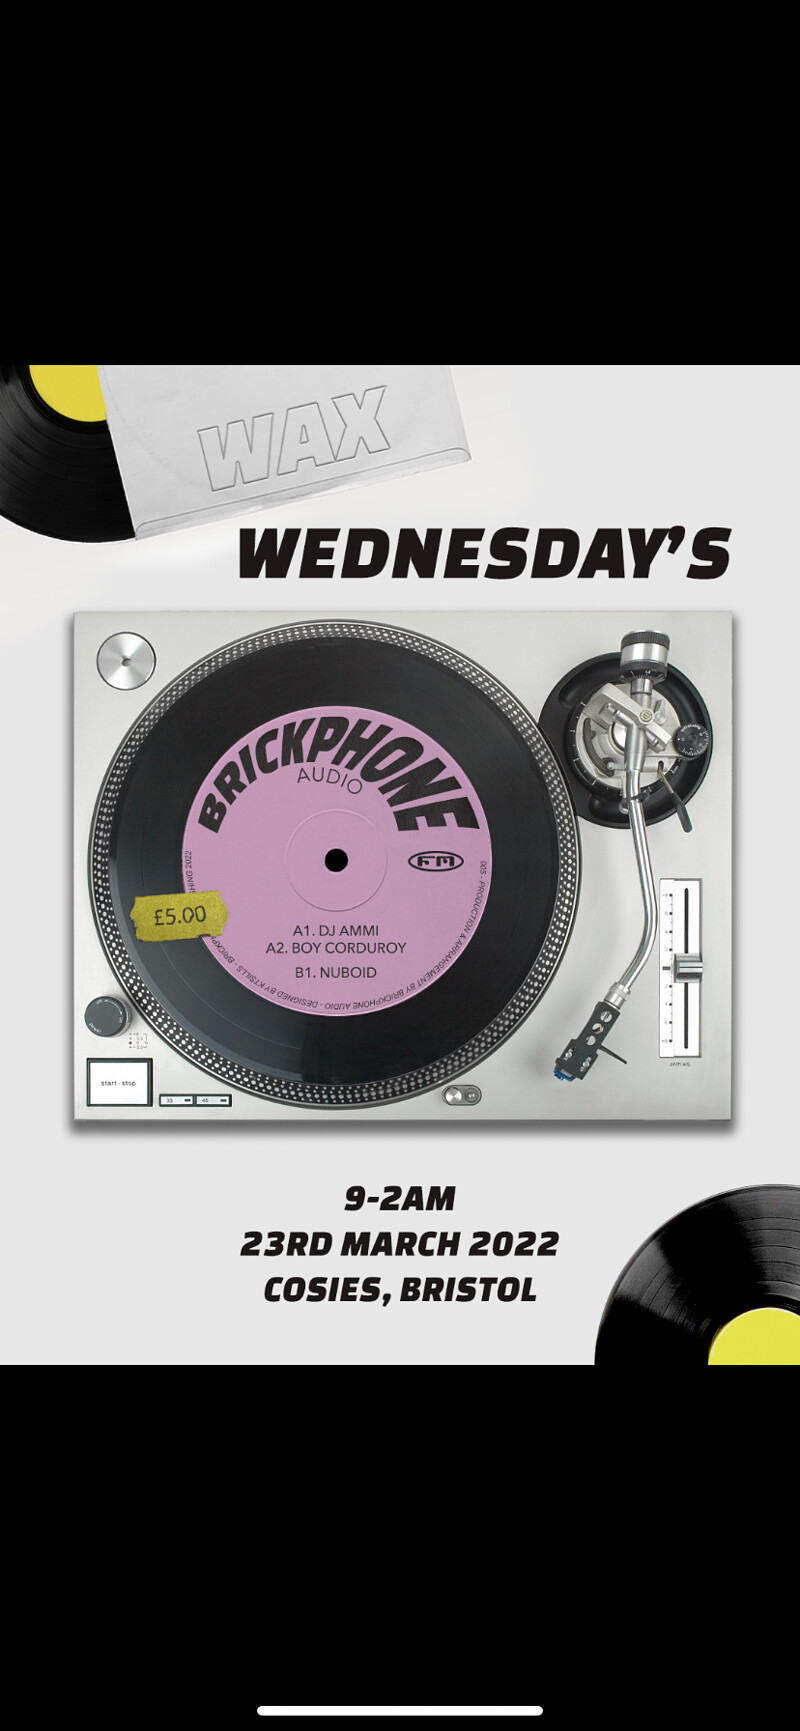 Wax Wednesday's with BrickPhone Audio at Cosies